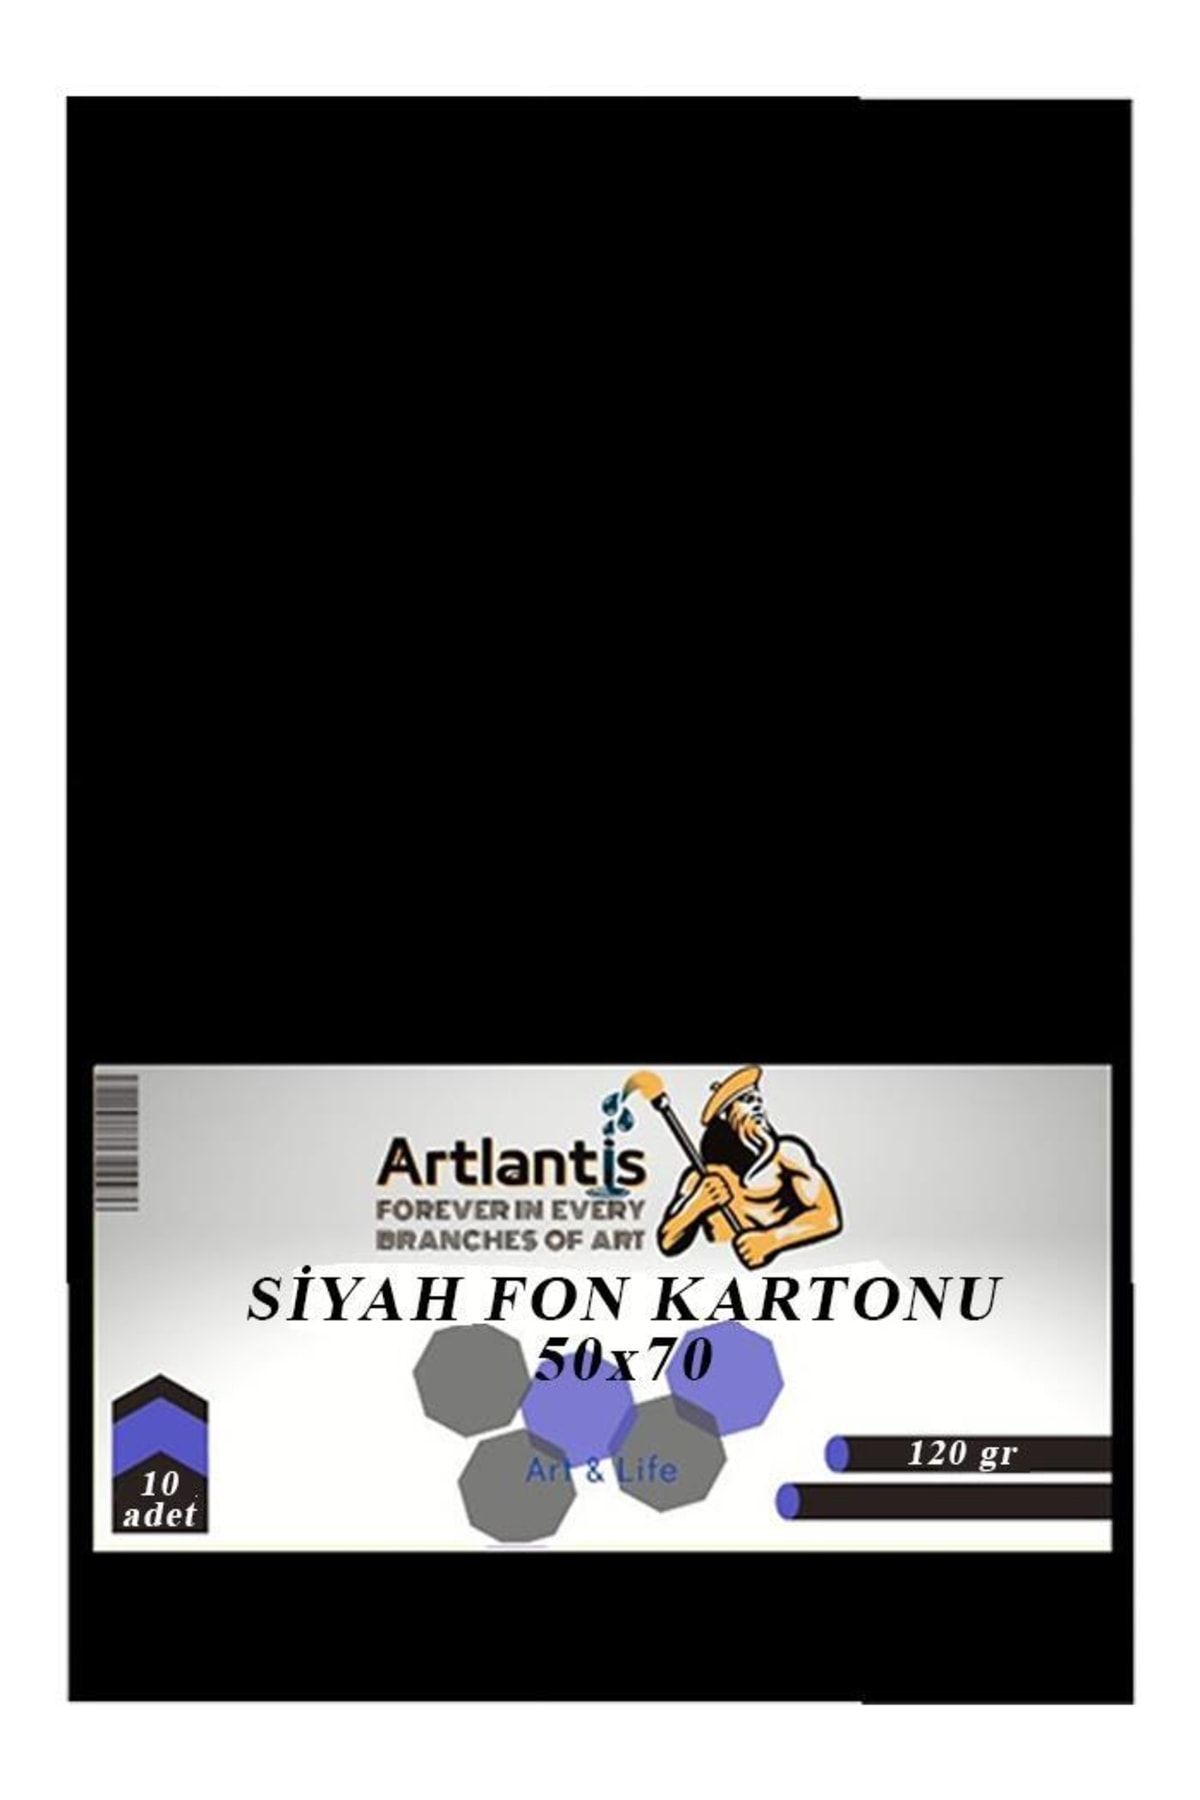 Artlantis Siyah Fon Kartonu 50x70 Cm 120 Gr 10 Adet 50*70 Fon Kartonu Hamurundan Boyama Orjinal Tam Siyah Renk